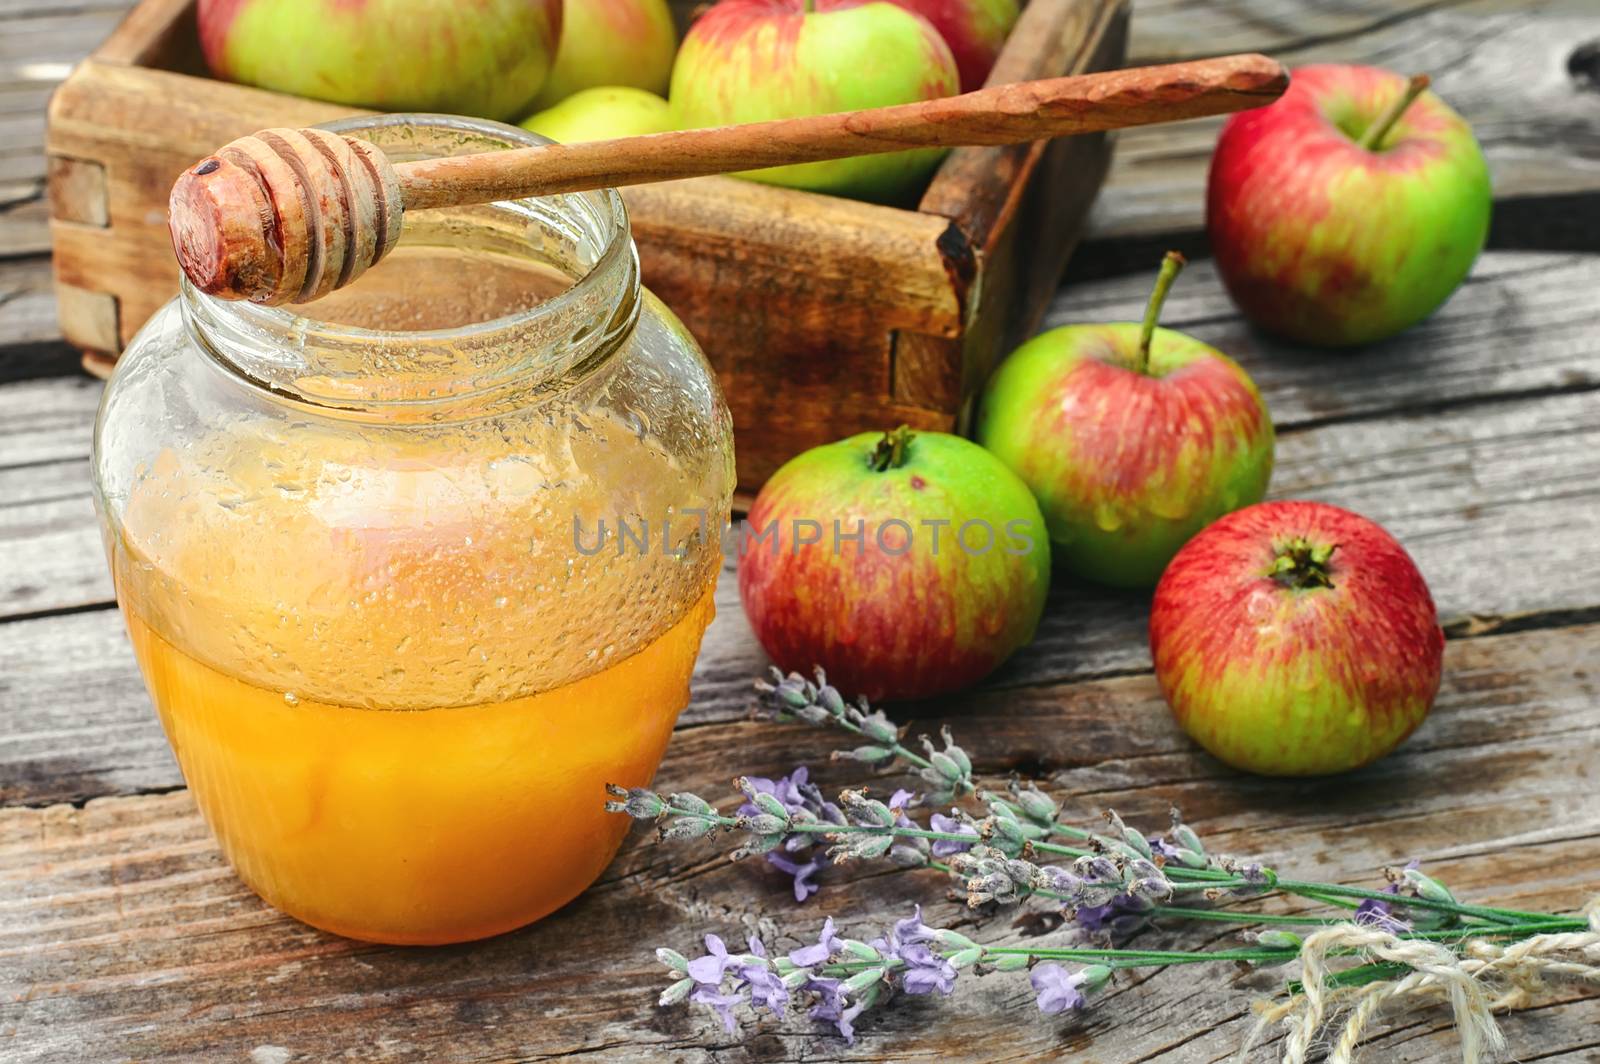 Fragrant summer apples and jar of honey